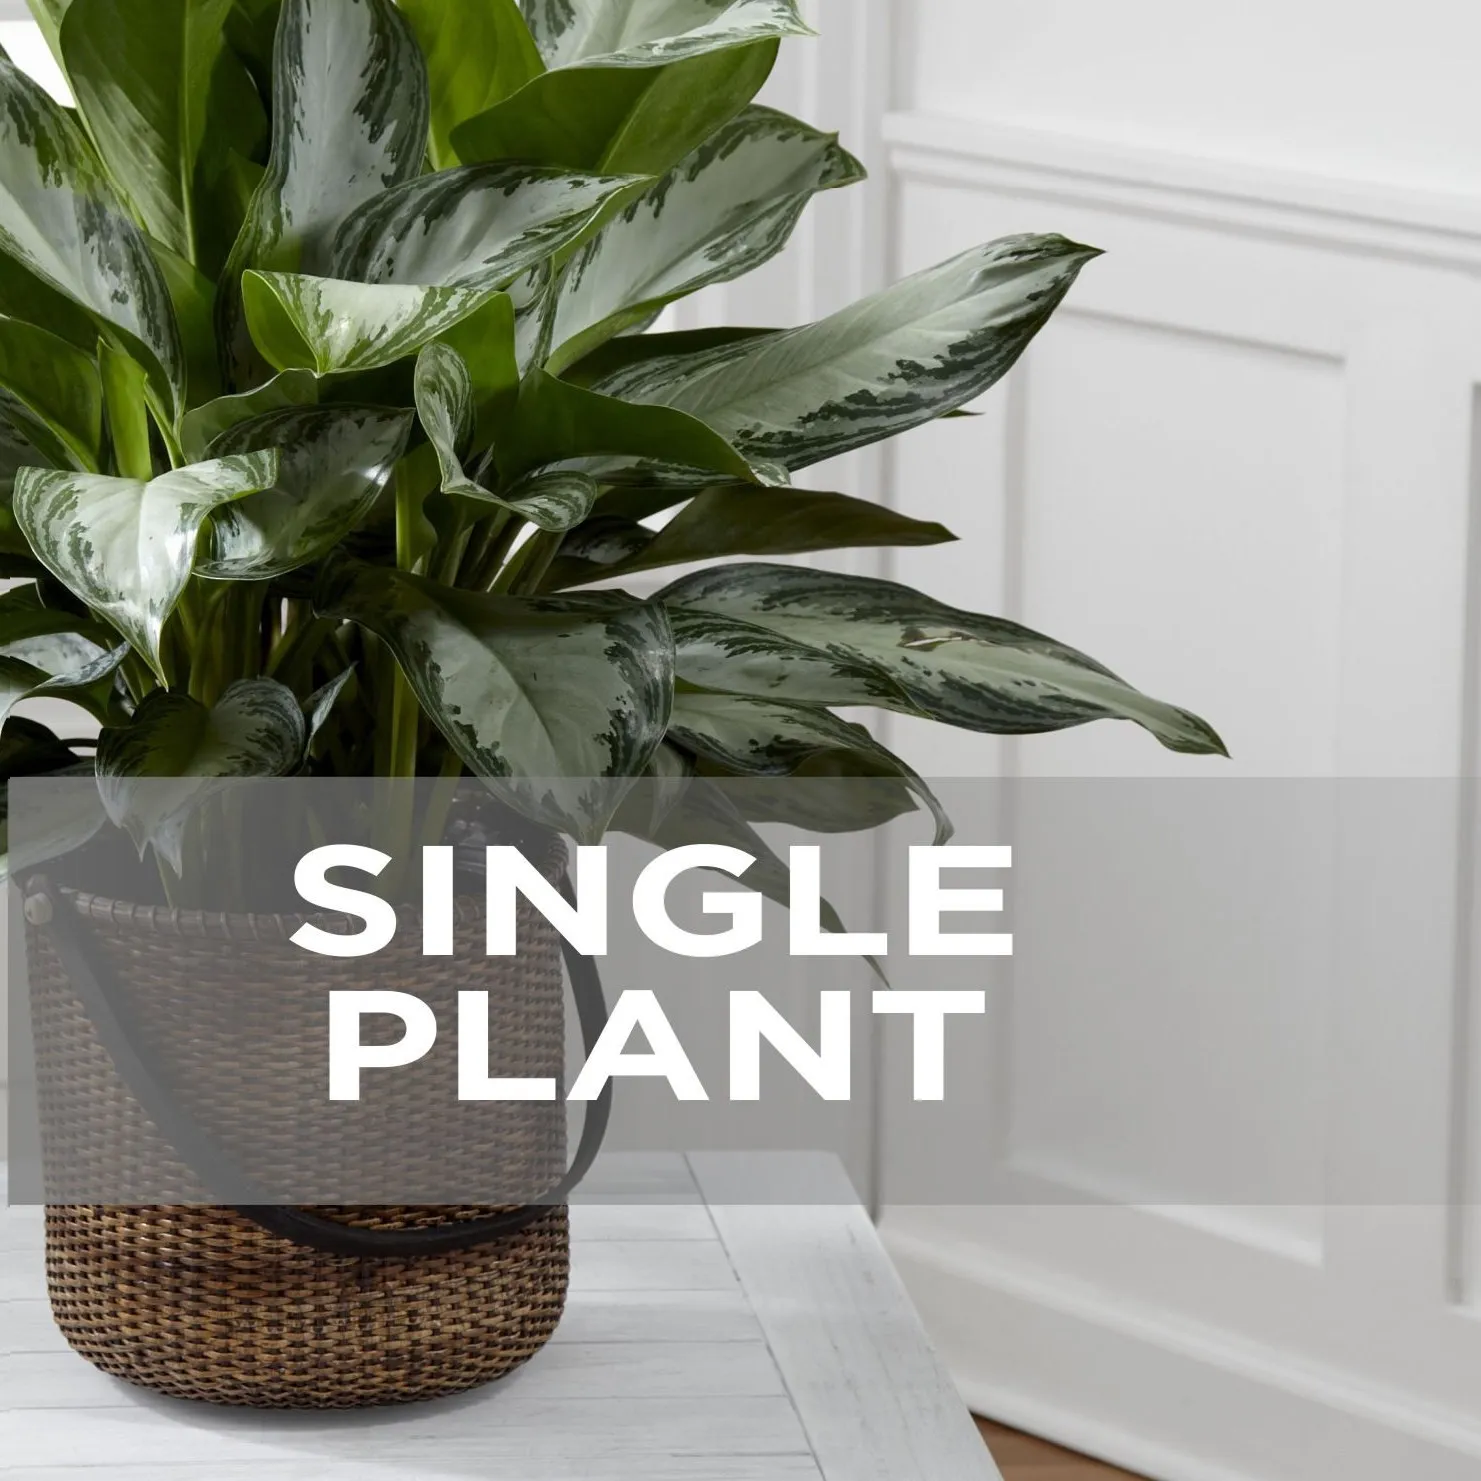 Single Plant - Venezuela